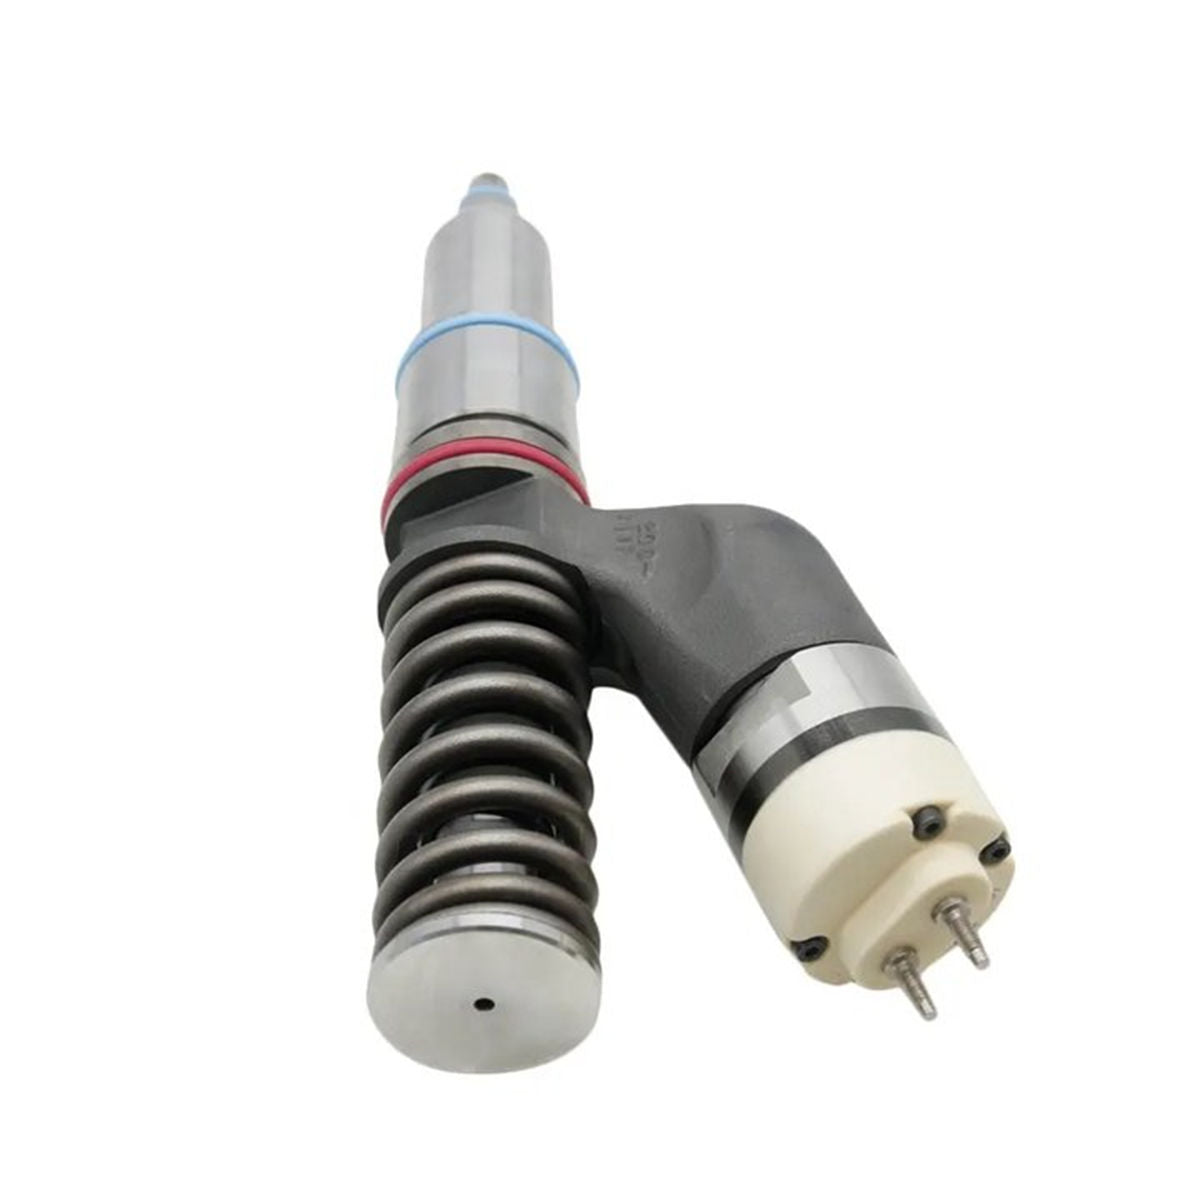 118-9035 10R-2780 Fuel Injector for Caterpillar 3406E Diesel Engine - Sinocmp